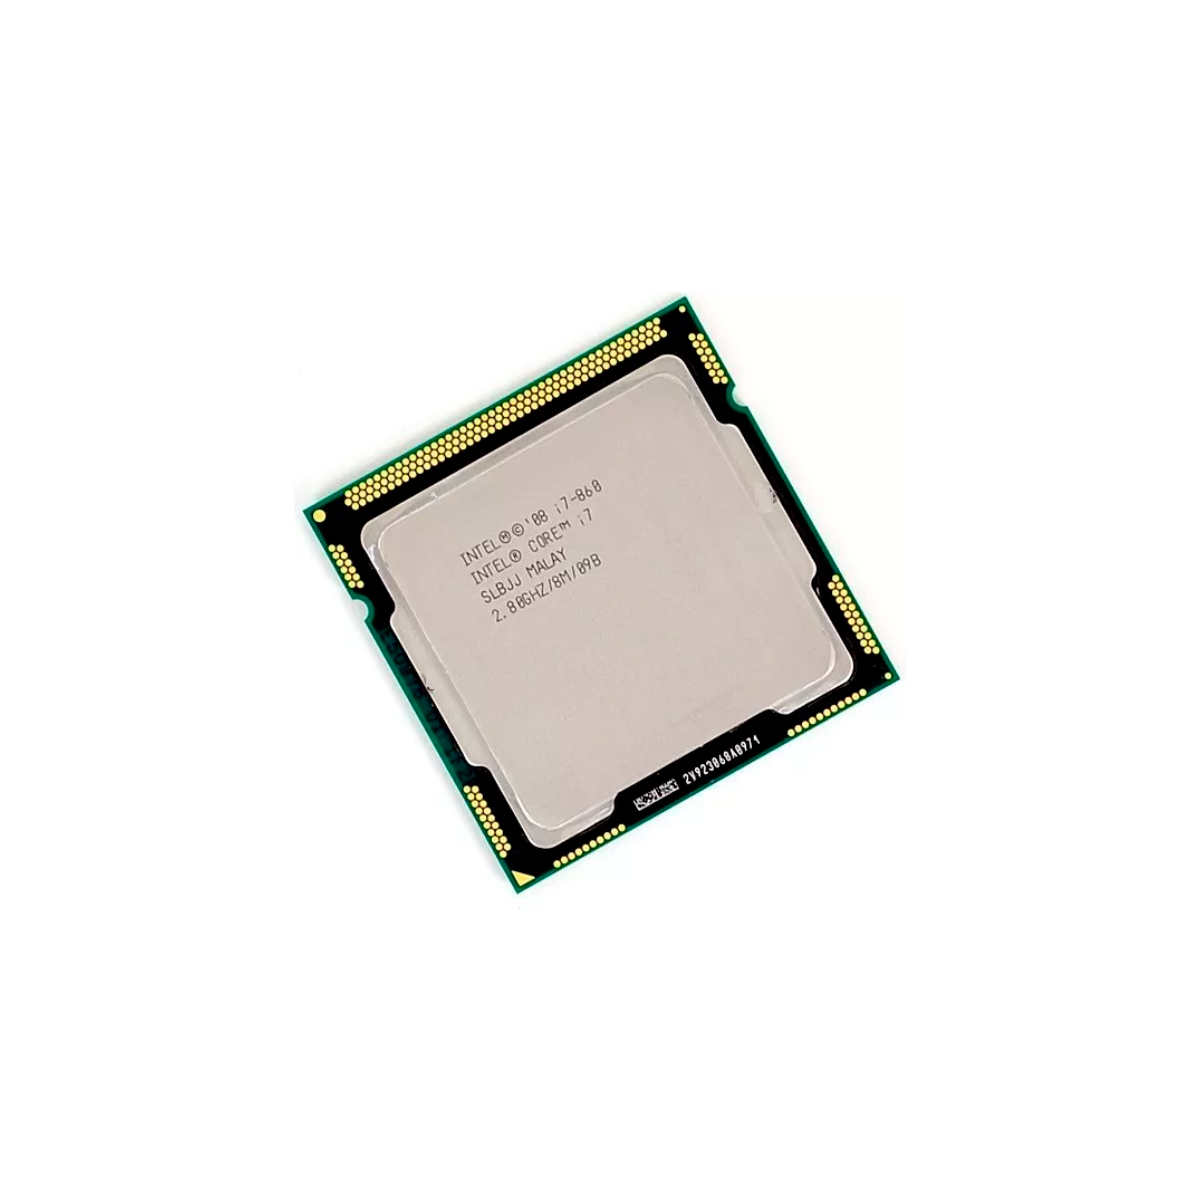 Intel® Core™ i7 860 - LGA 1156 - 2.8GHz (Turbo 3.46GHz) - cache 8MB - sem Gráfico integrado e Cooler - OEM